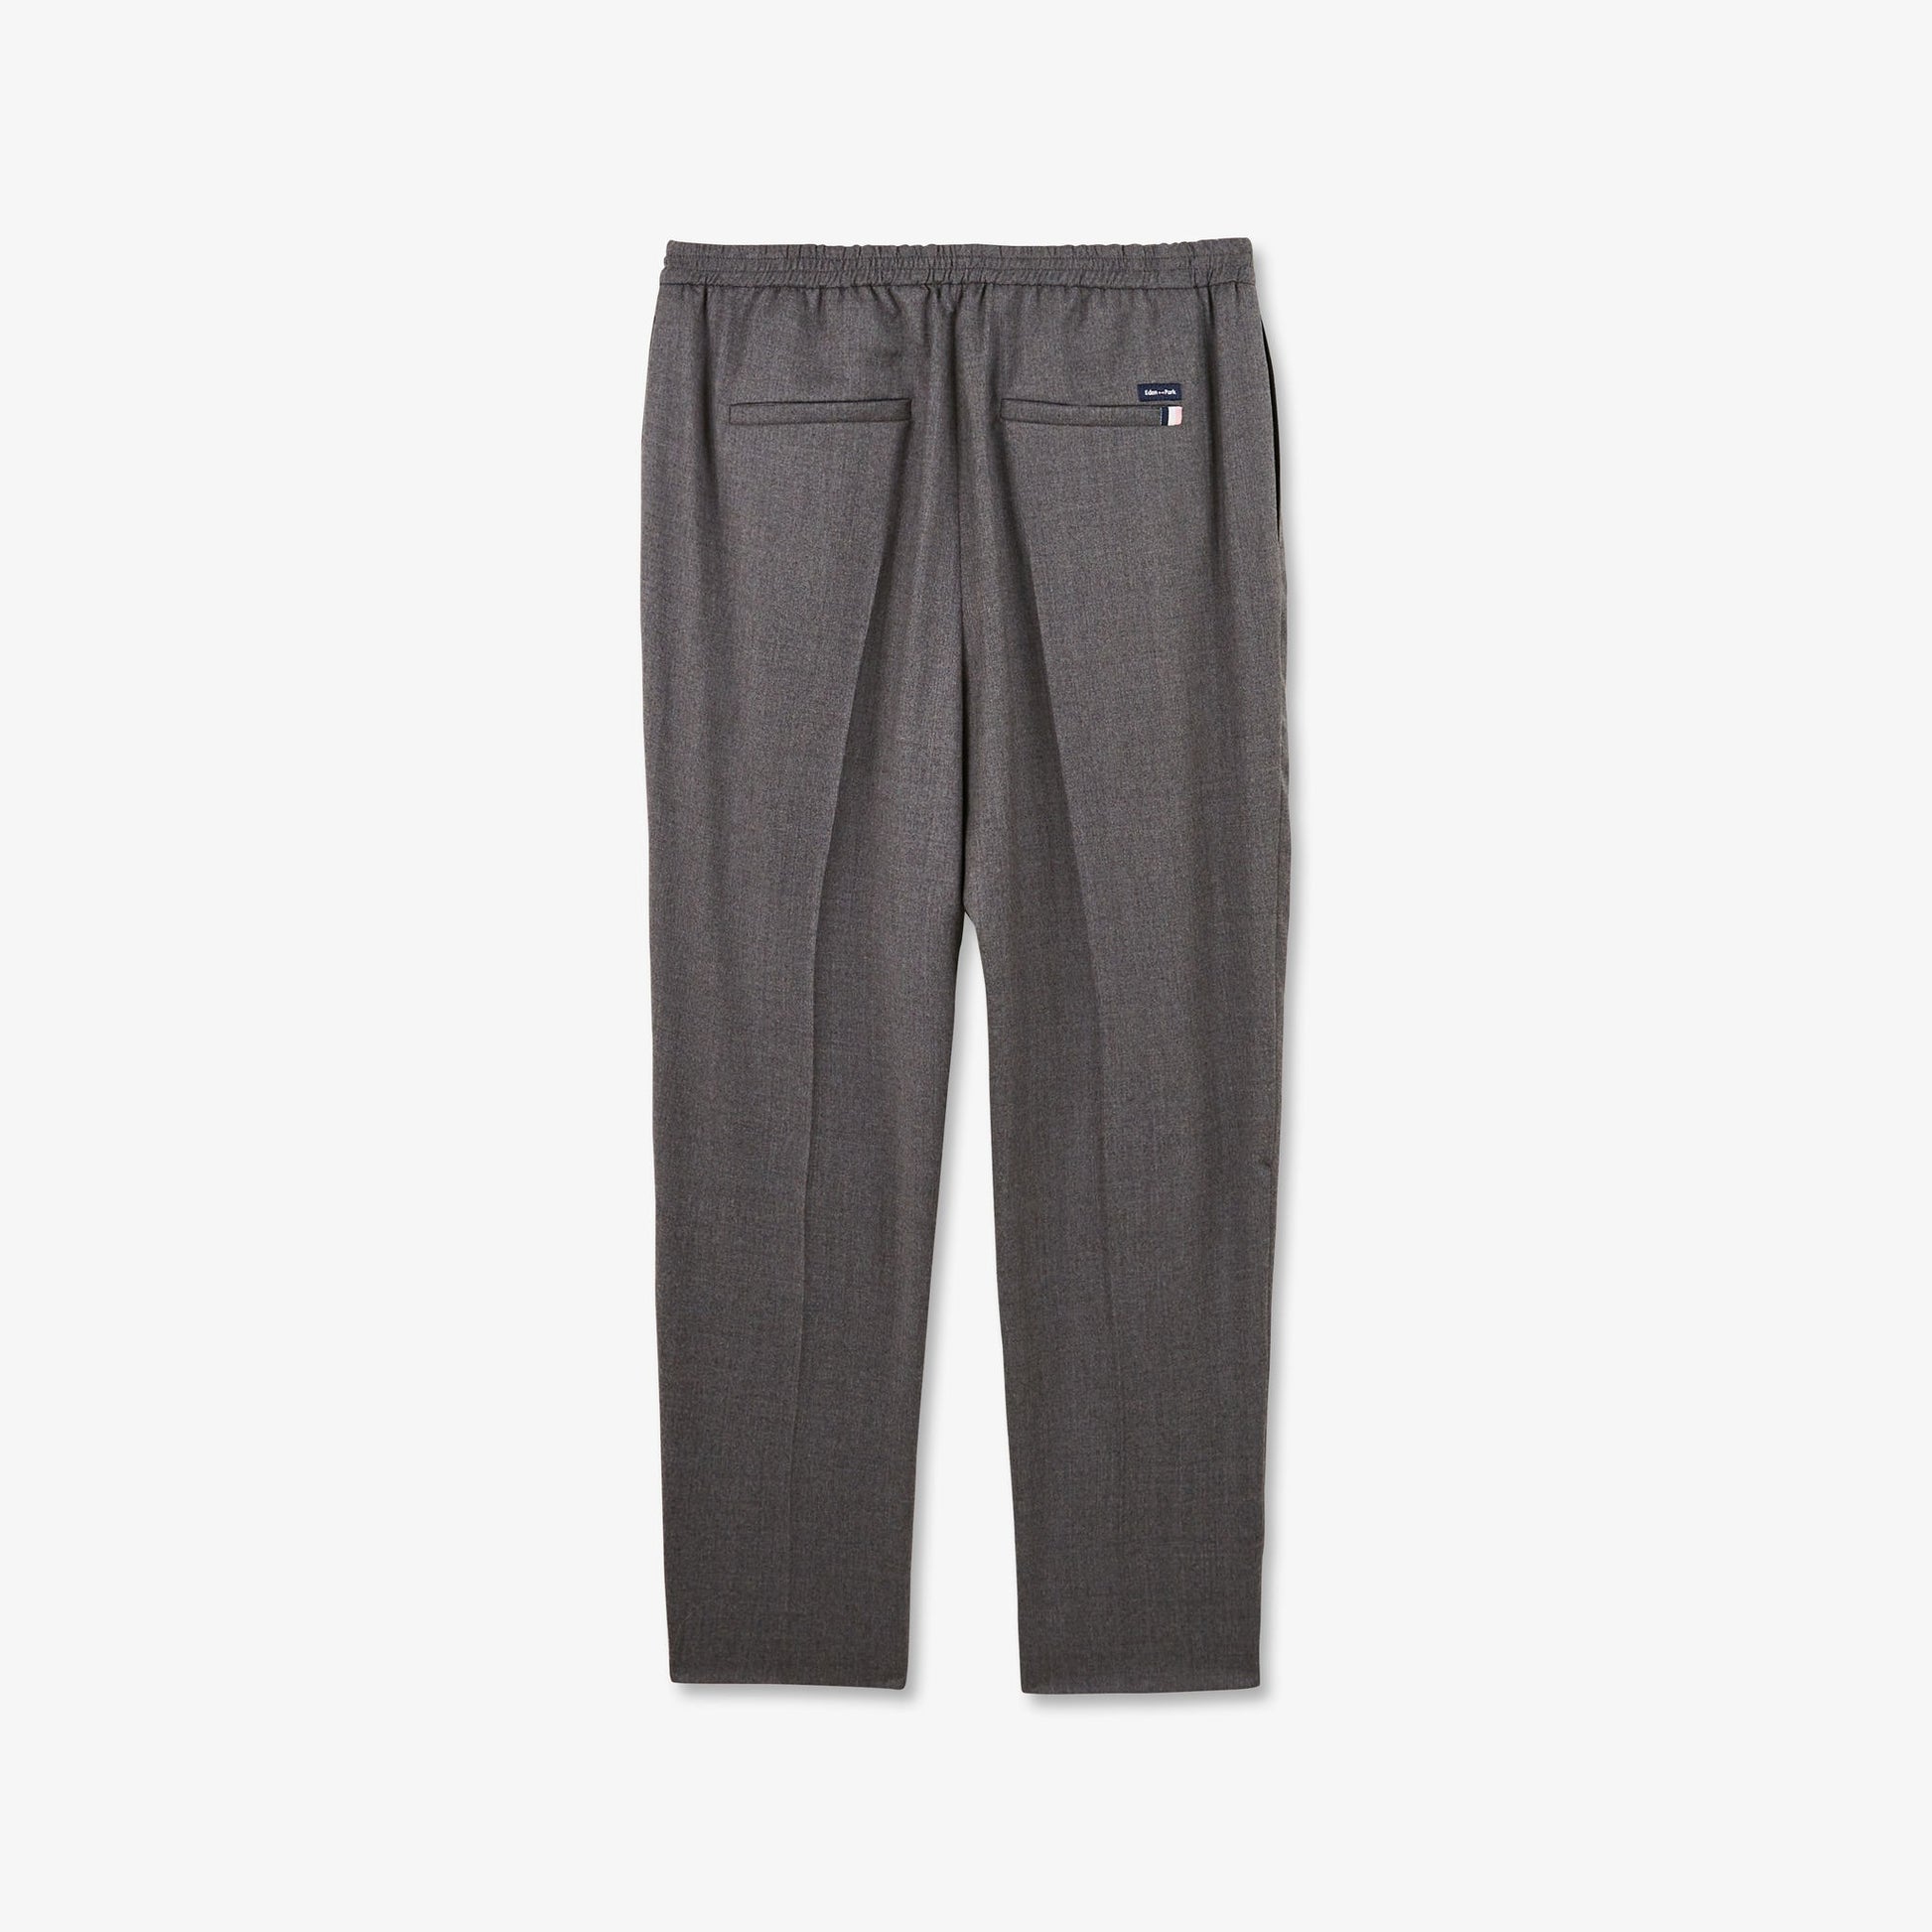 Pantalon gris chiné uni